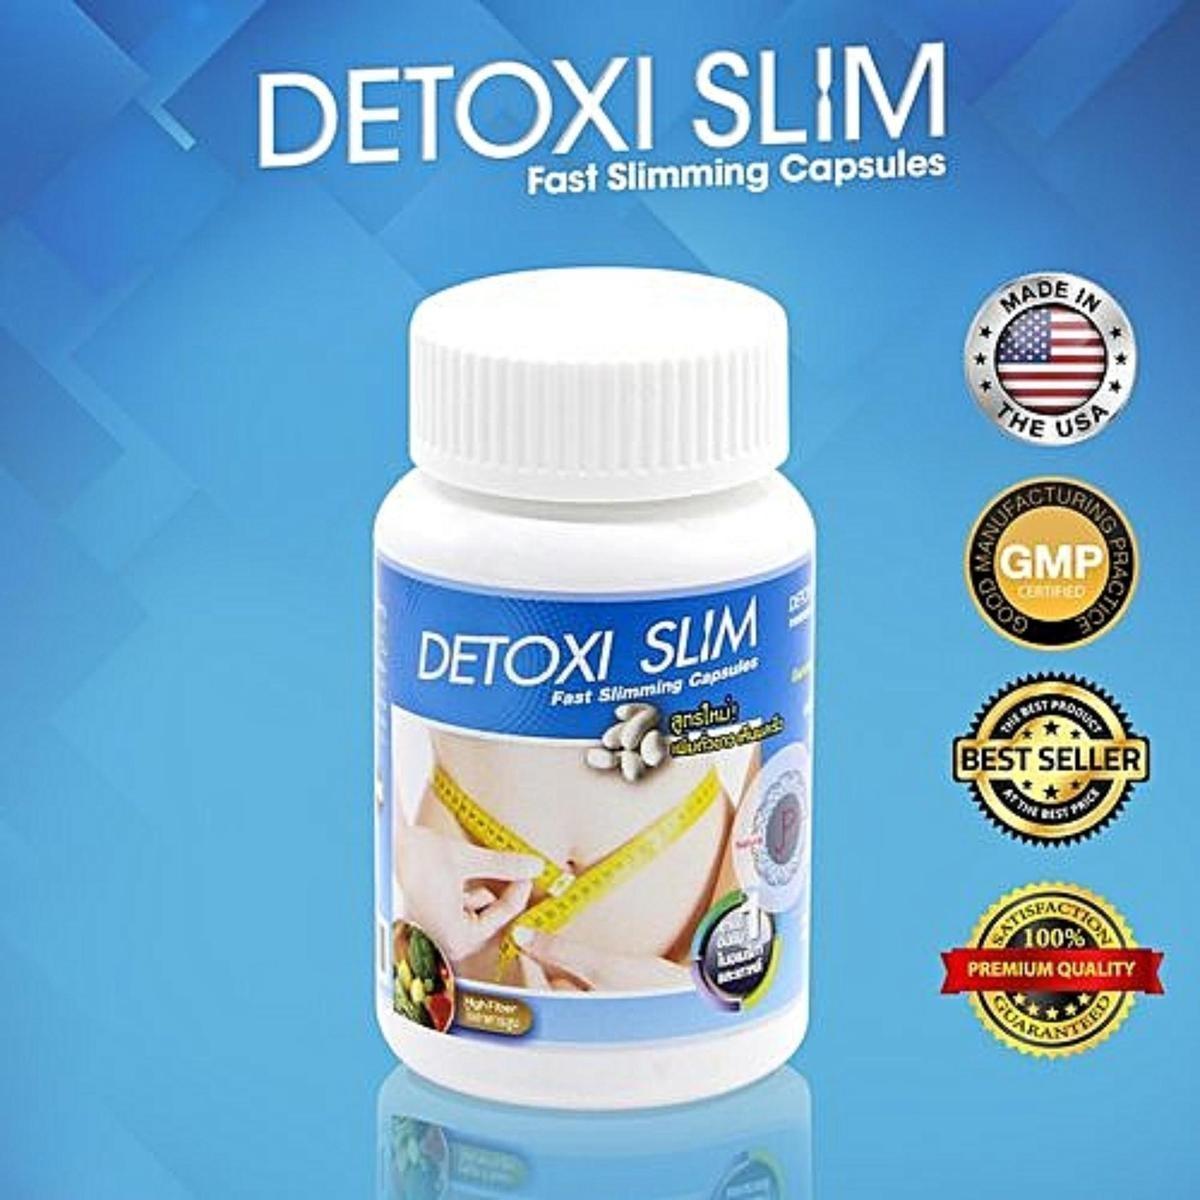 original detoxi slim fast slimming weight loss supplement capsules 30 capsules